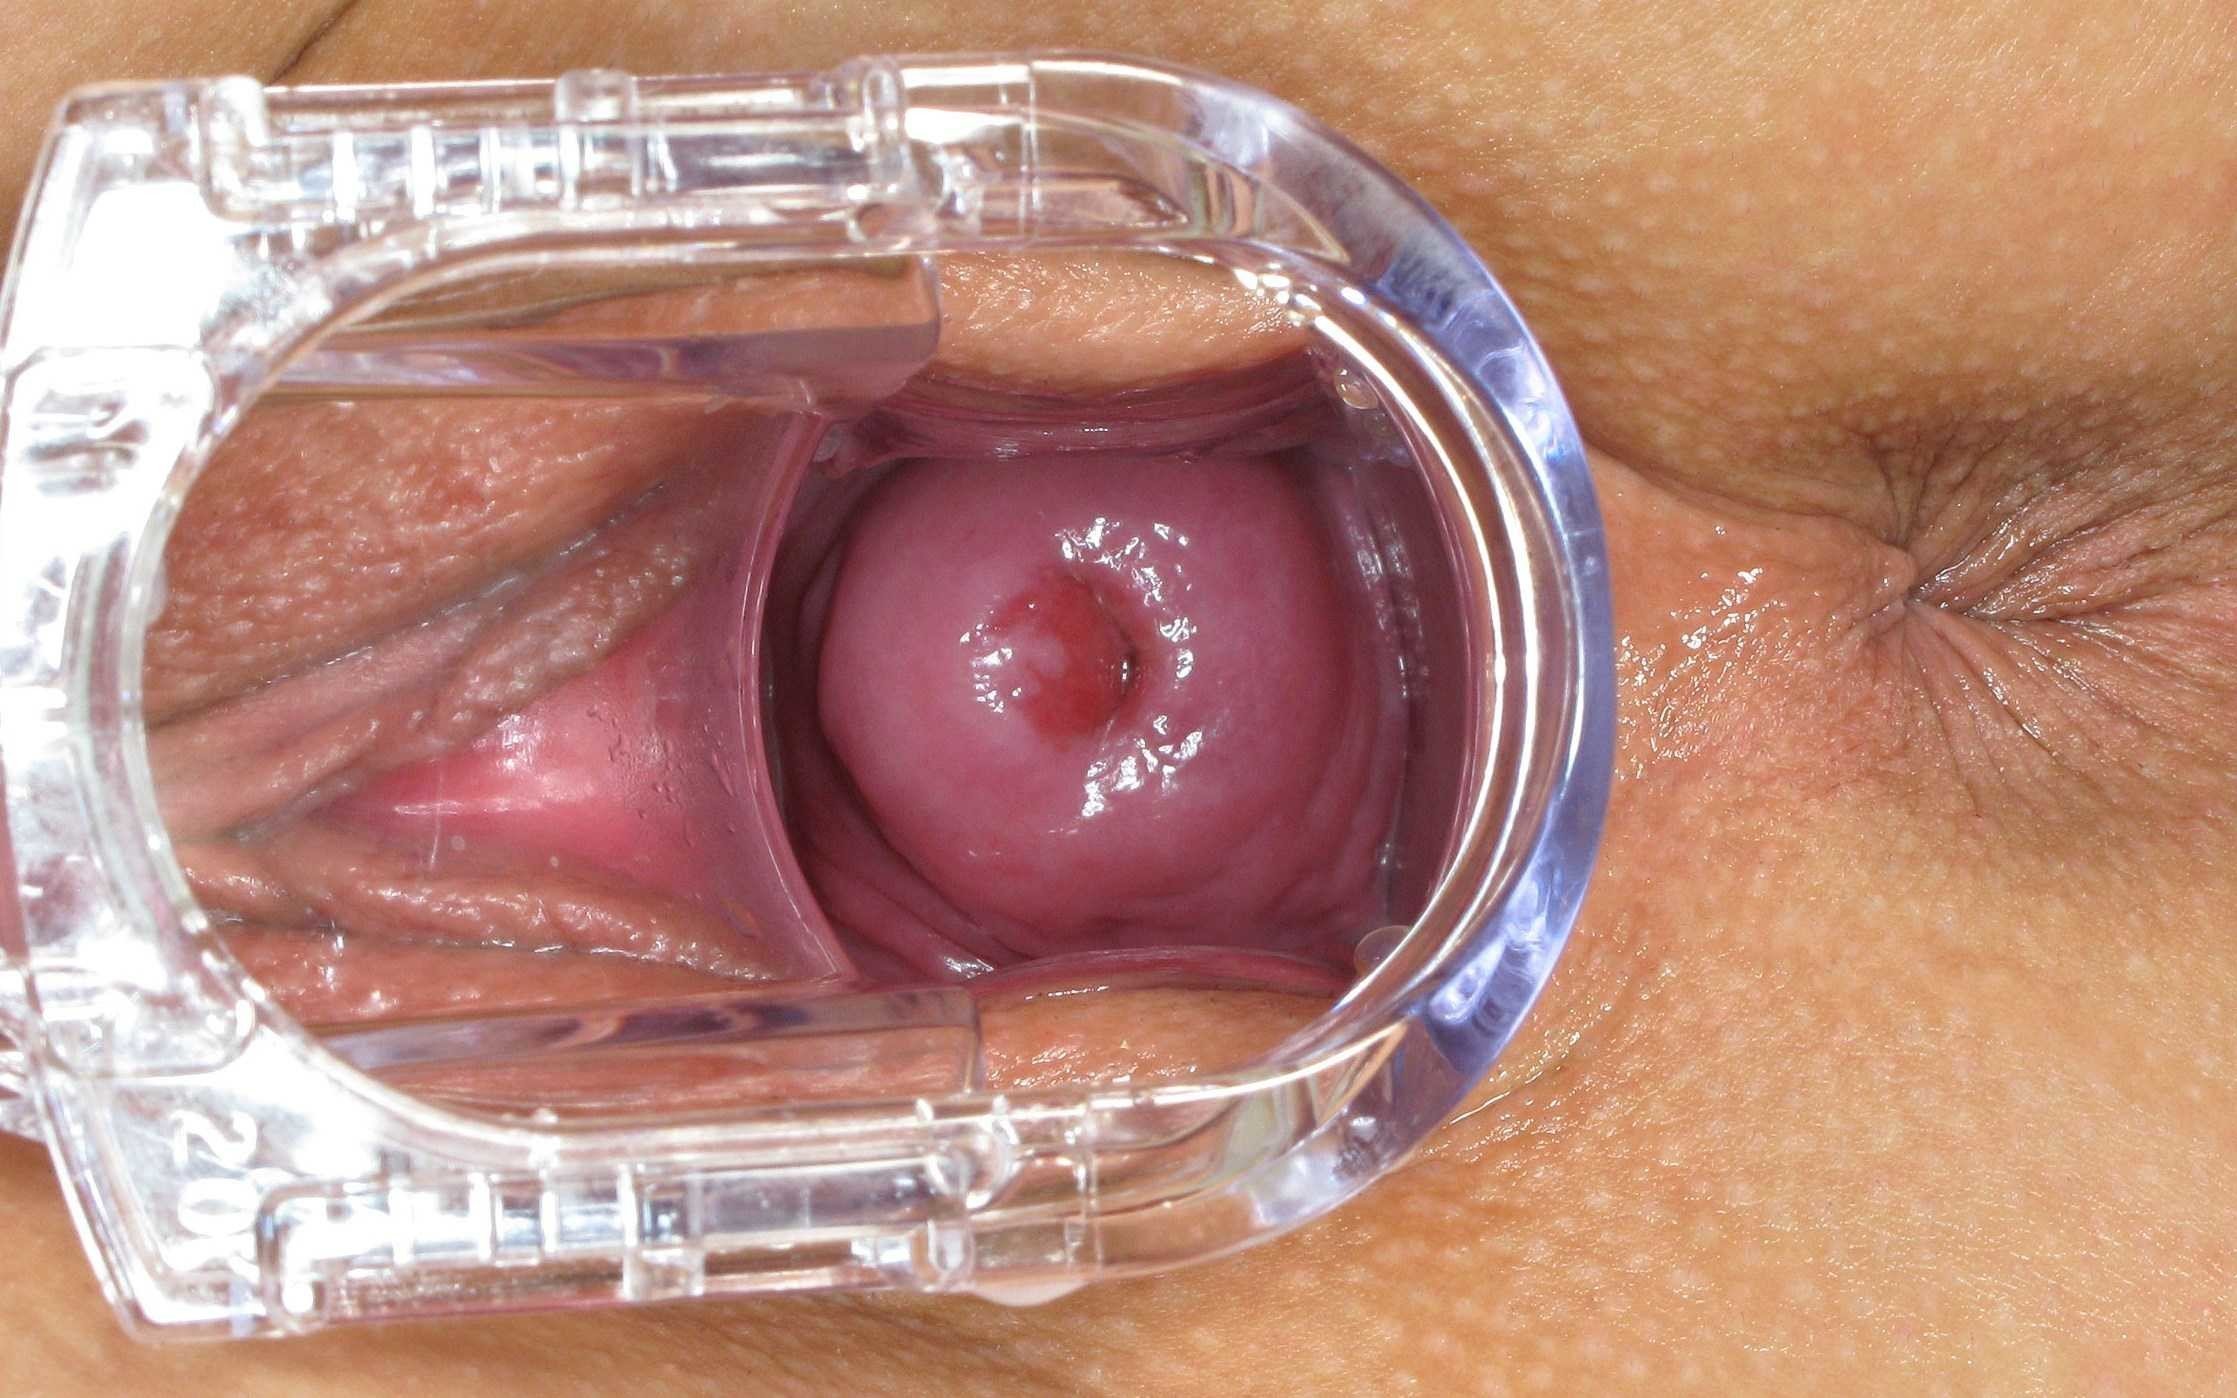 Head inserted vagina